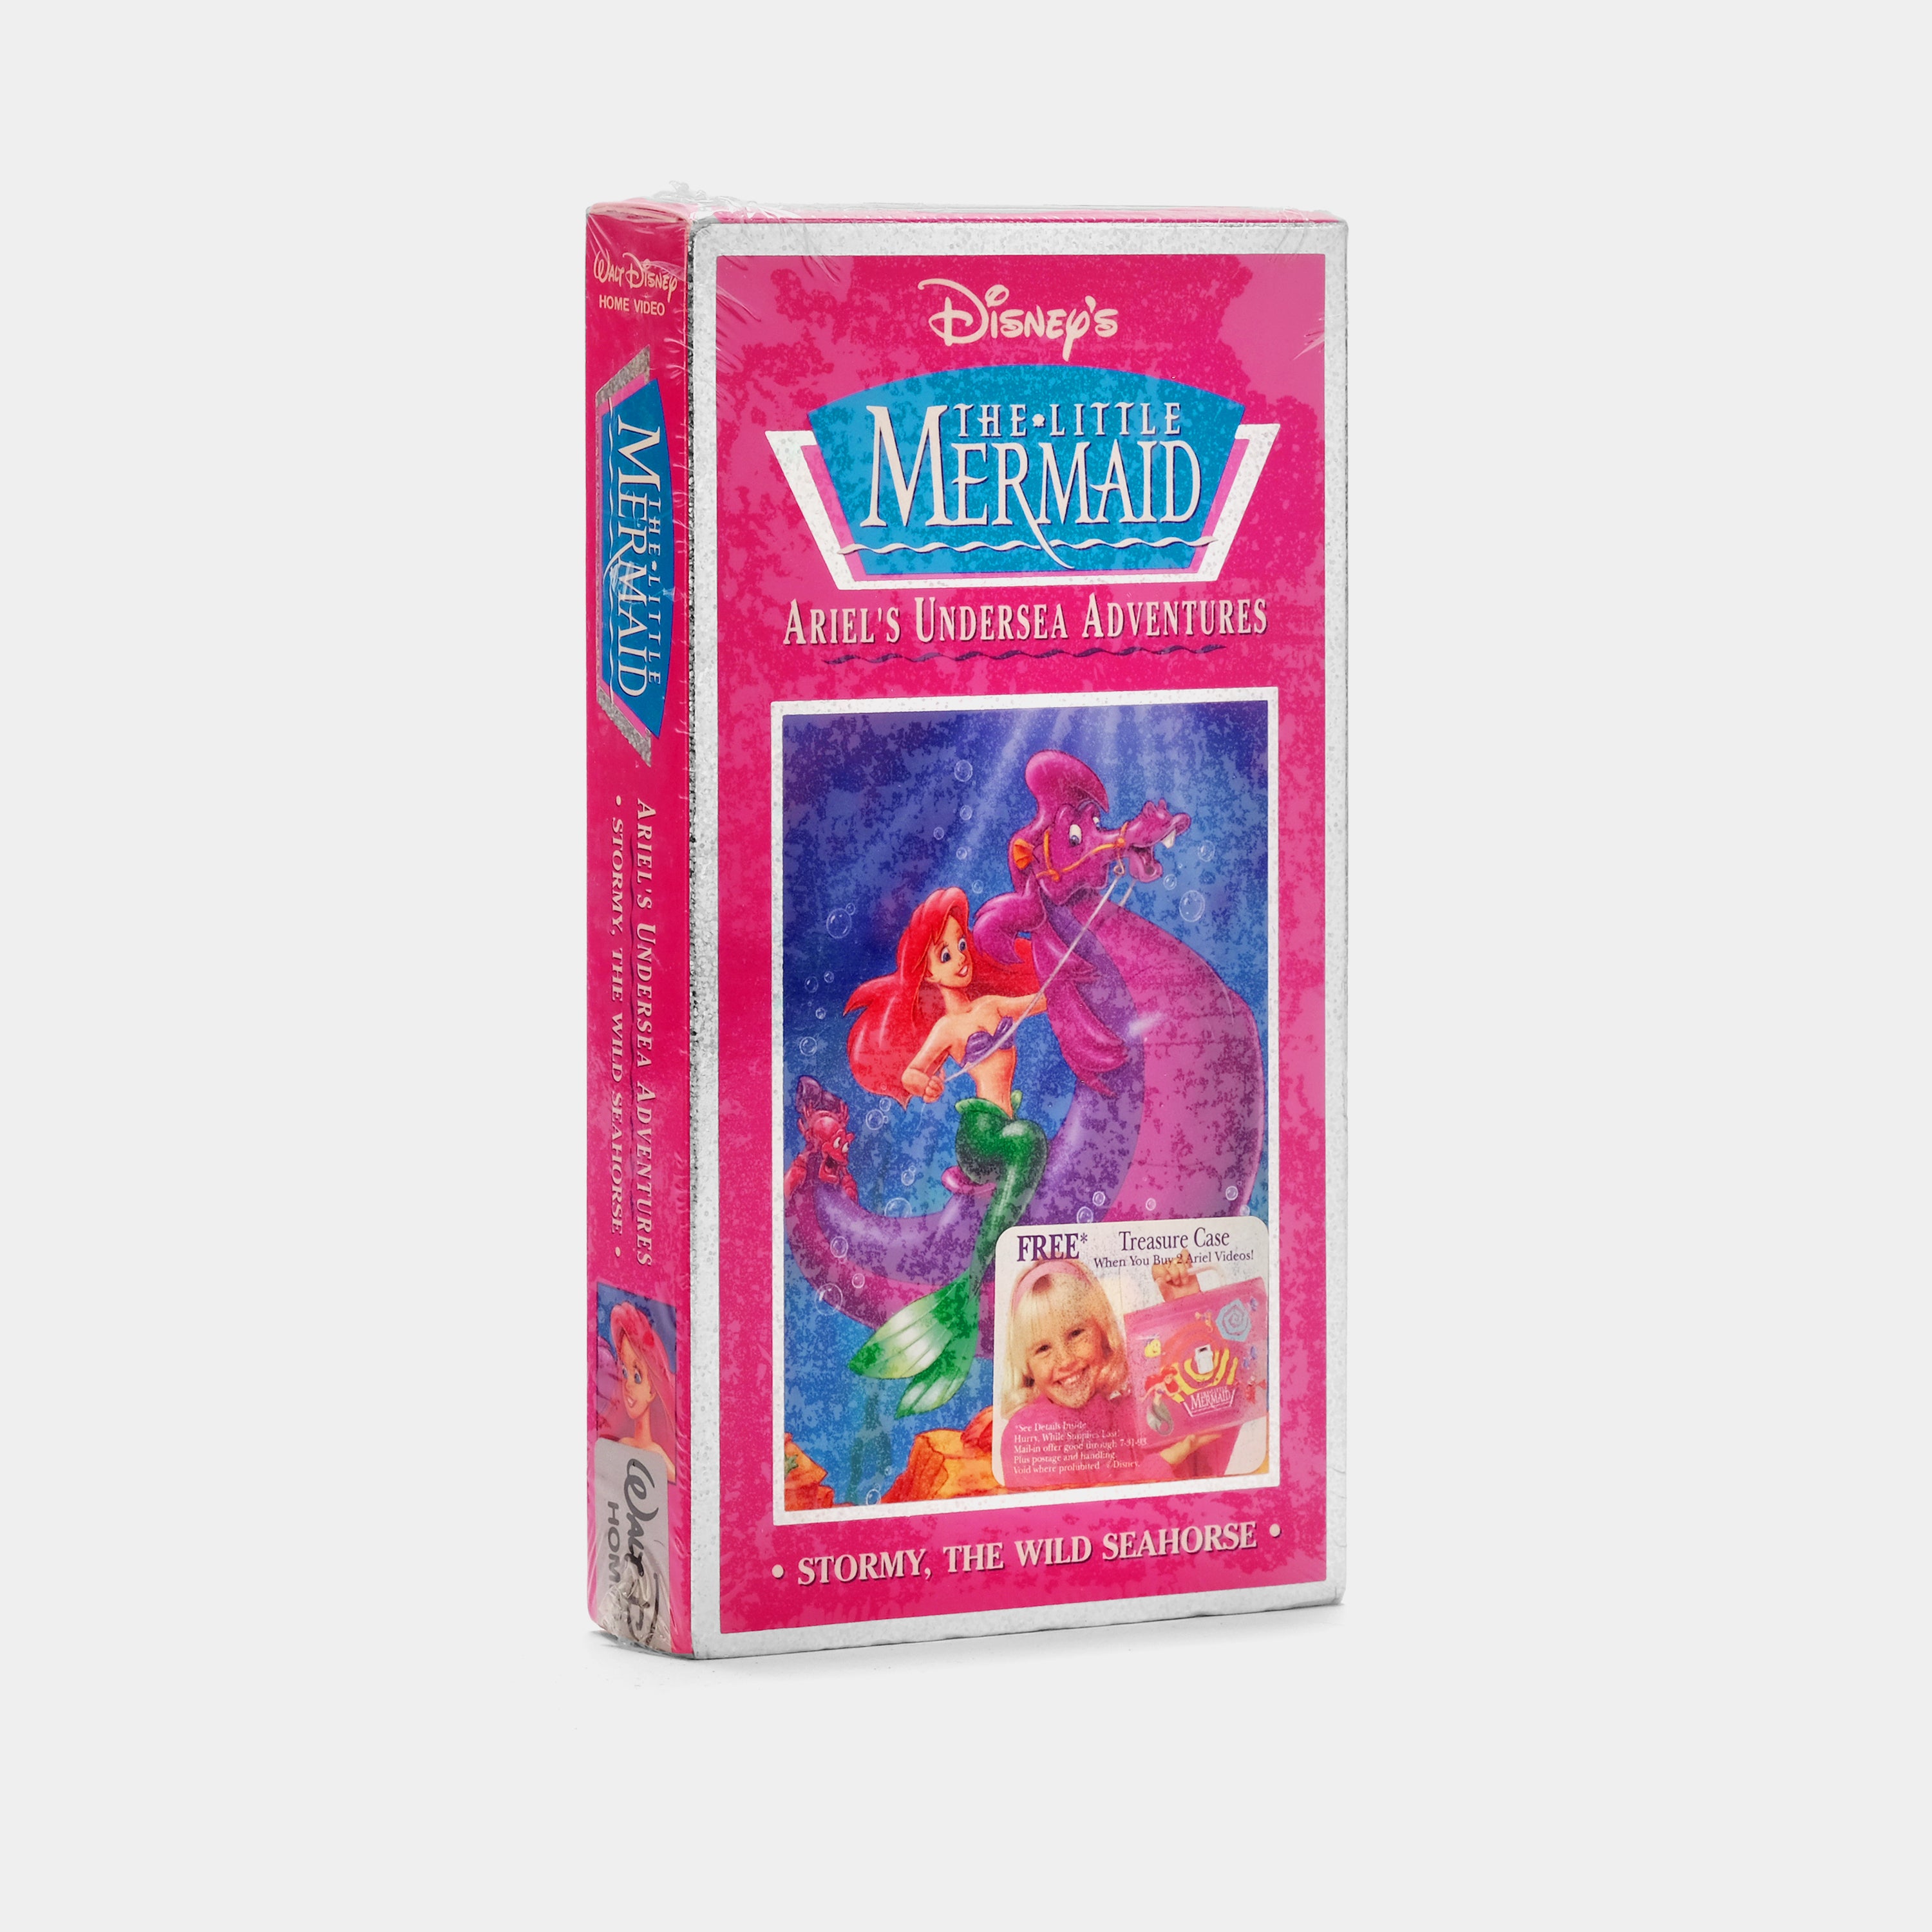 The Little Mermaid: Ariel's Undersea Adventures Vol. 2 (Sealed) VHS Tape